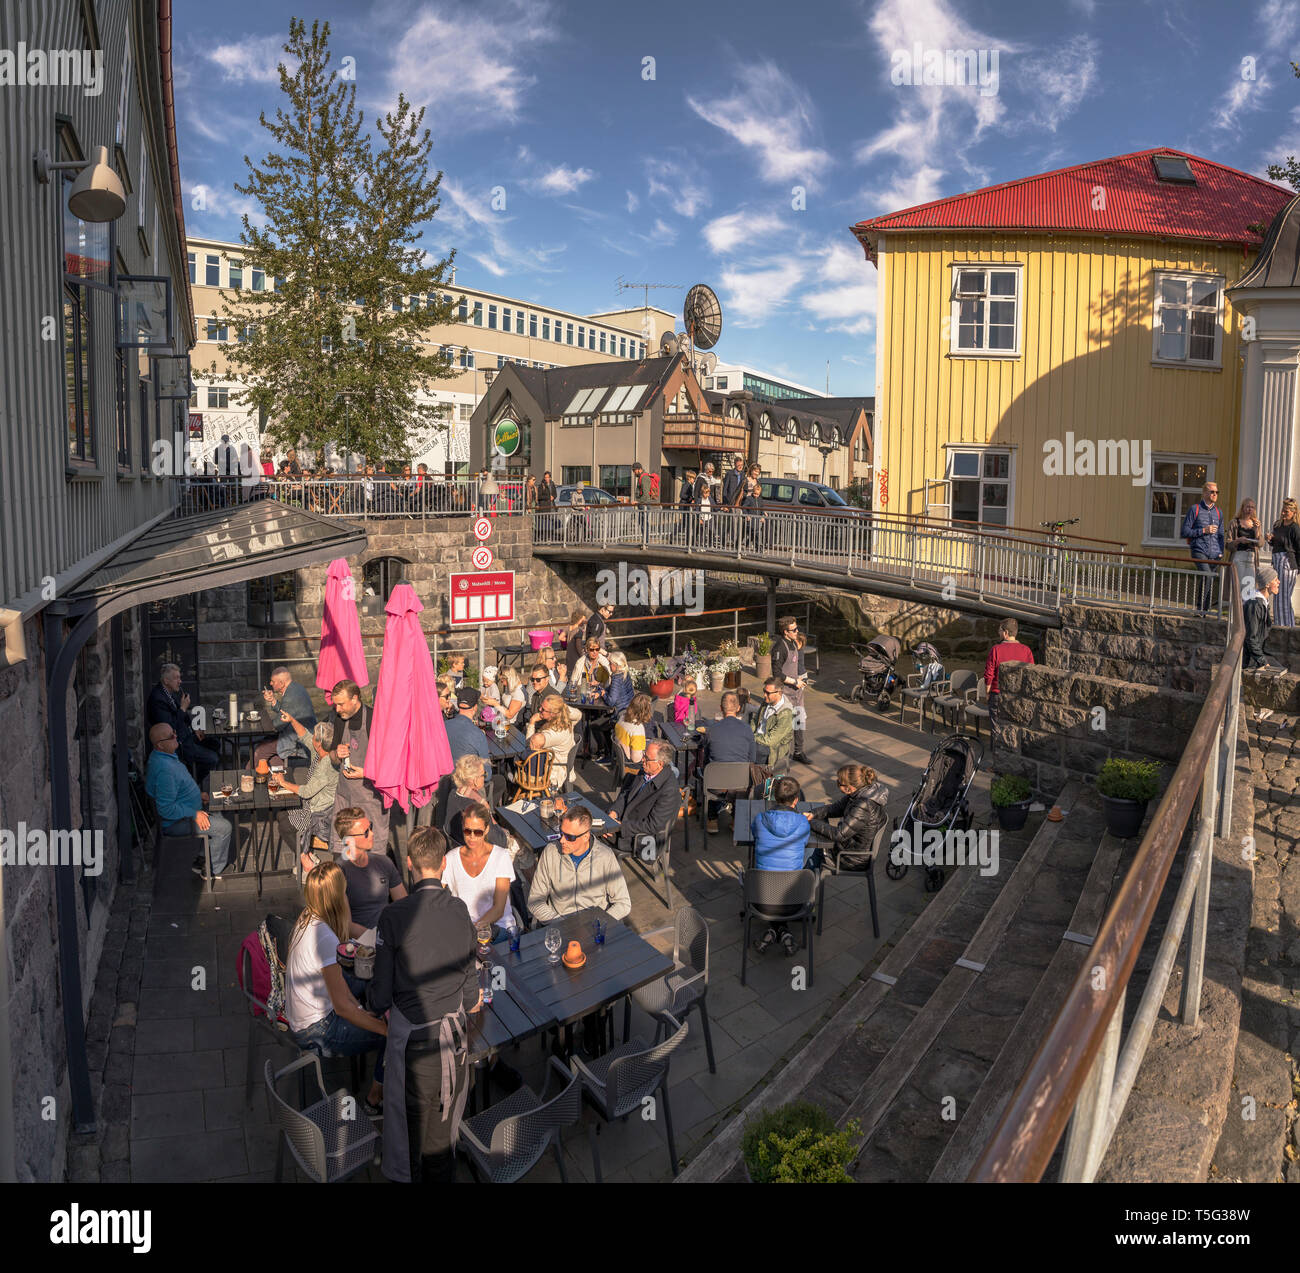 All'aperto Cafe, giornata culturale, Summer Festival, Reykjavik, Islanda Foto Stock